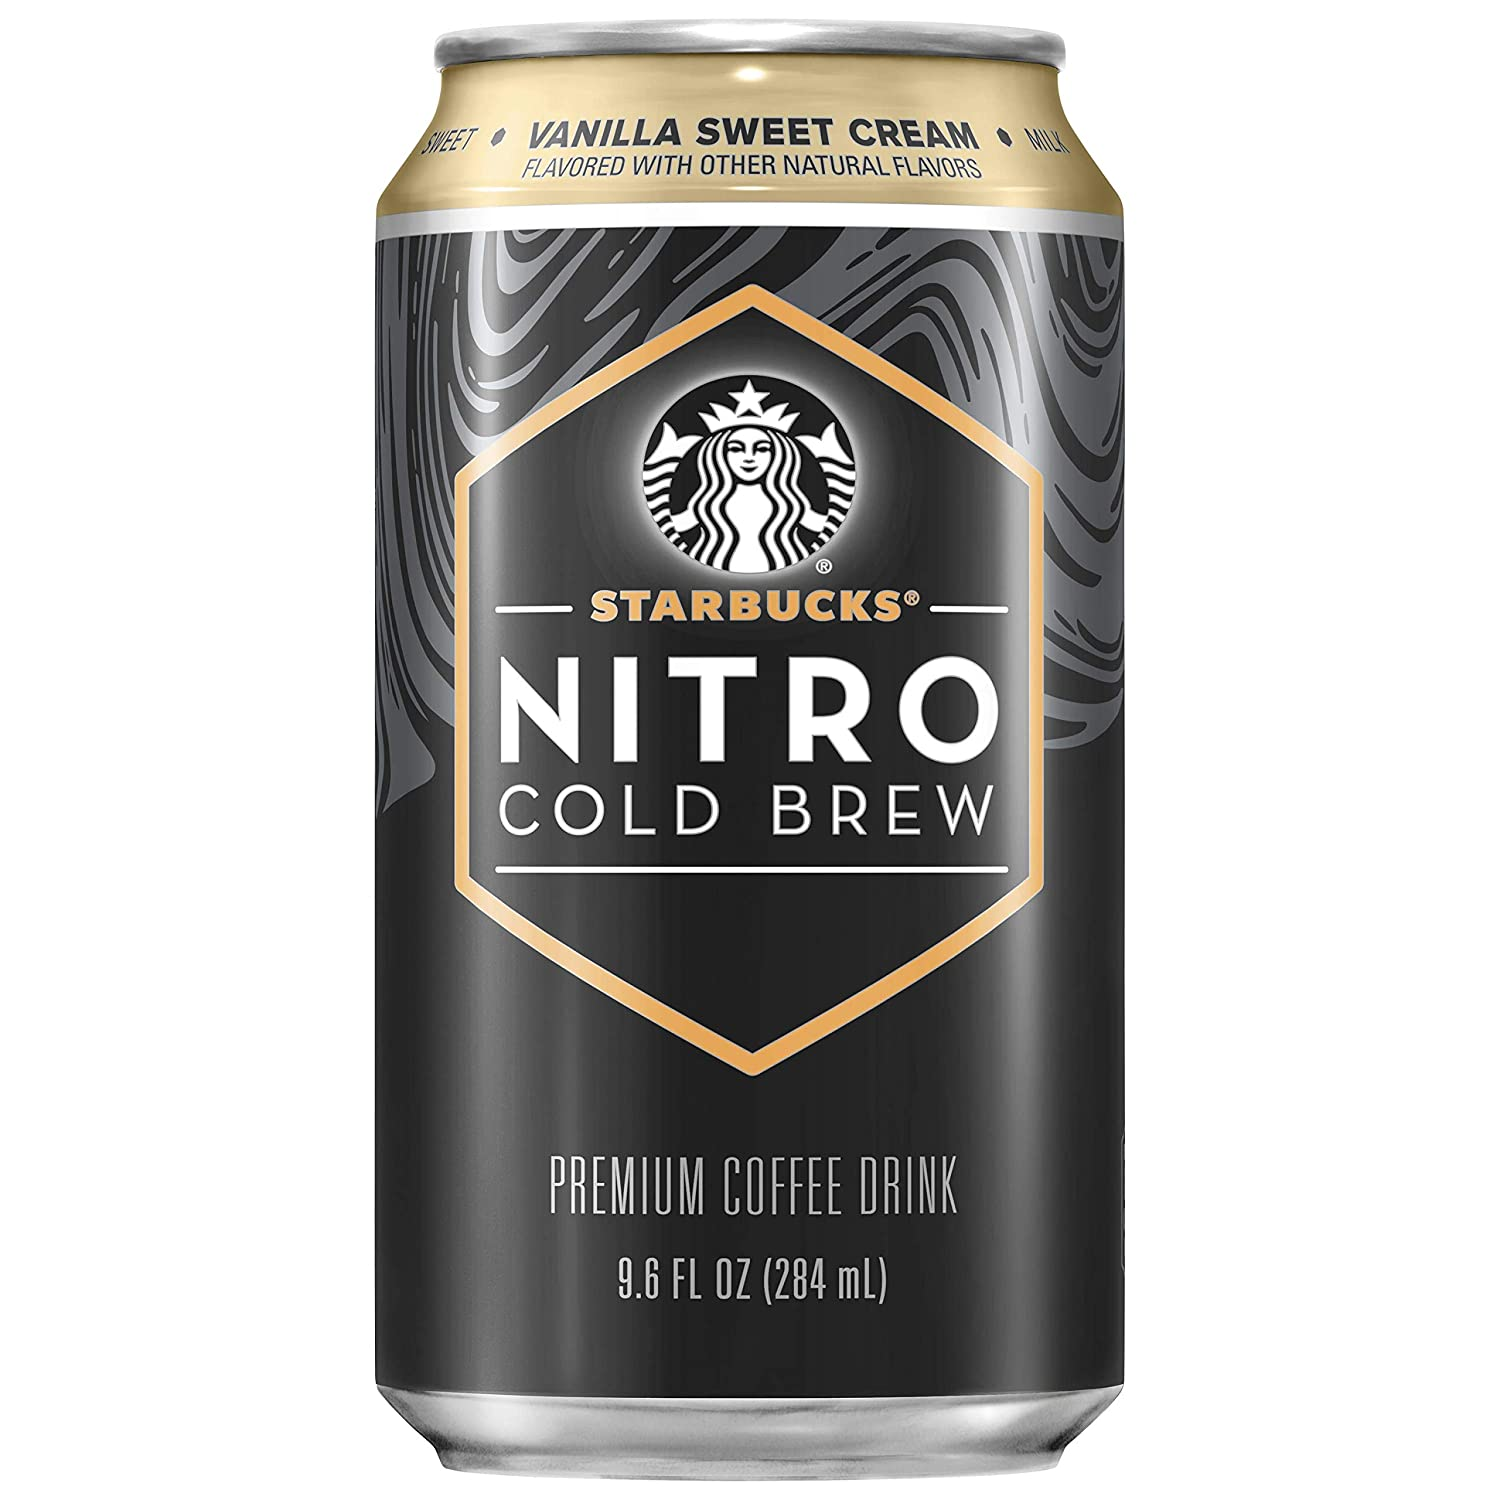 Starbucks Nitro Cold Brew, Vanilla Sweet Cream, 9.6 Fl oz Can